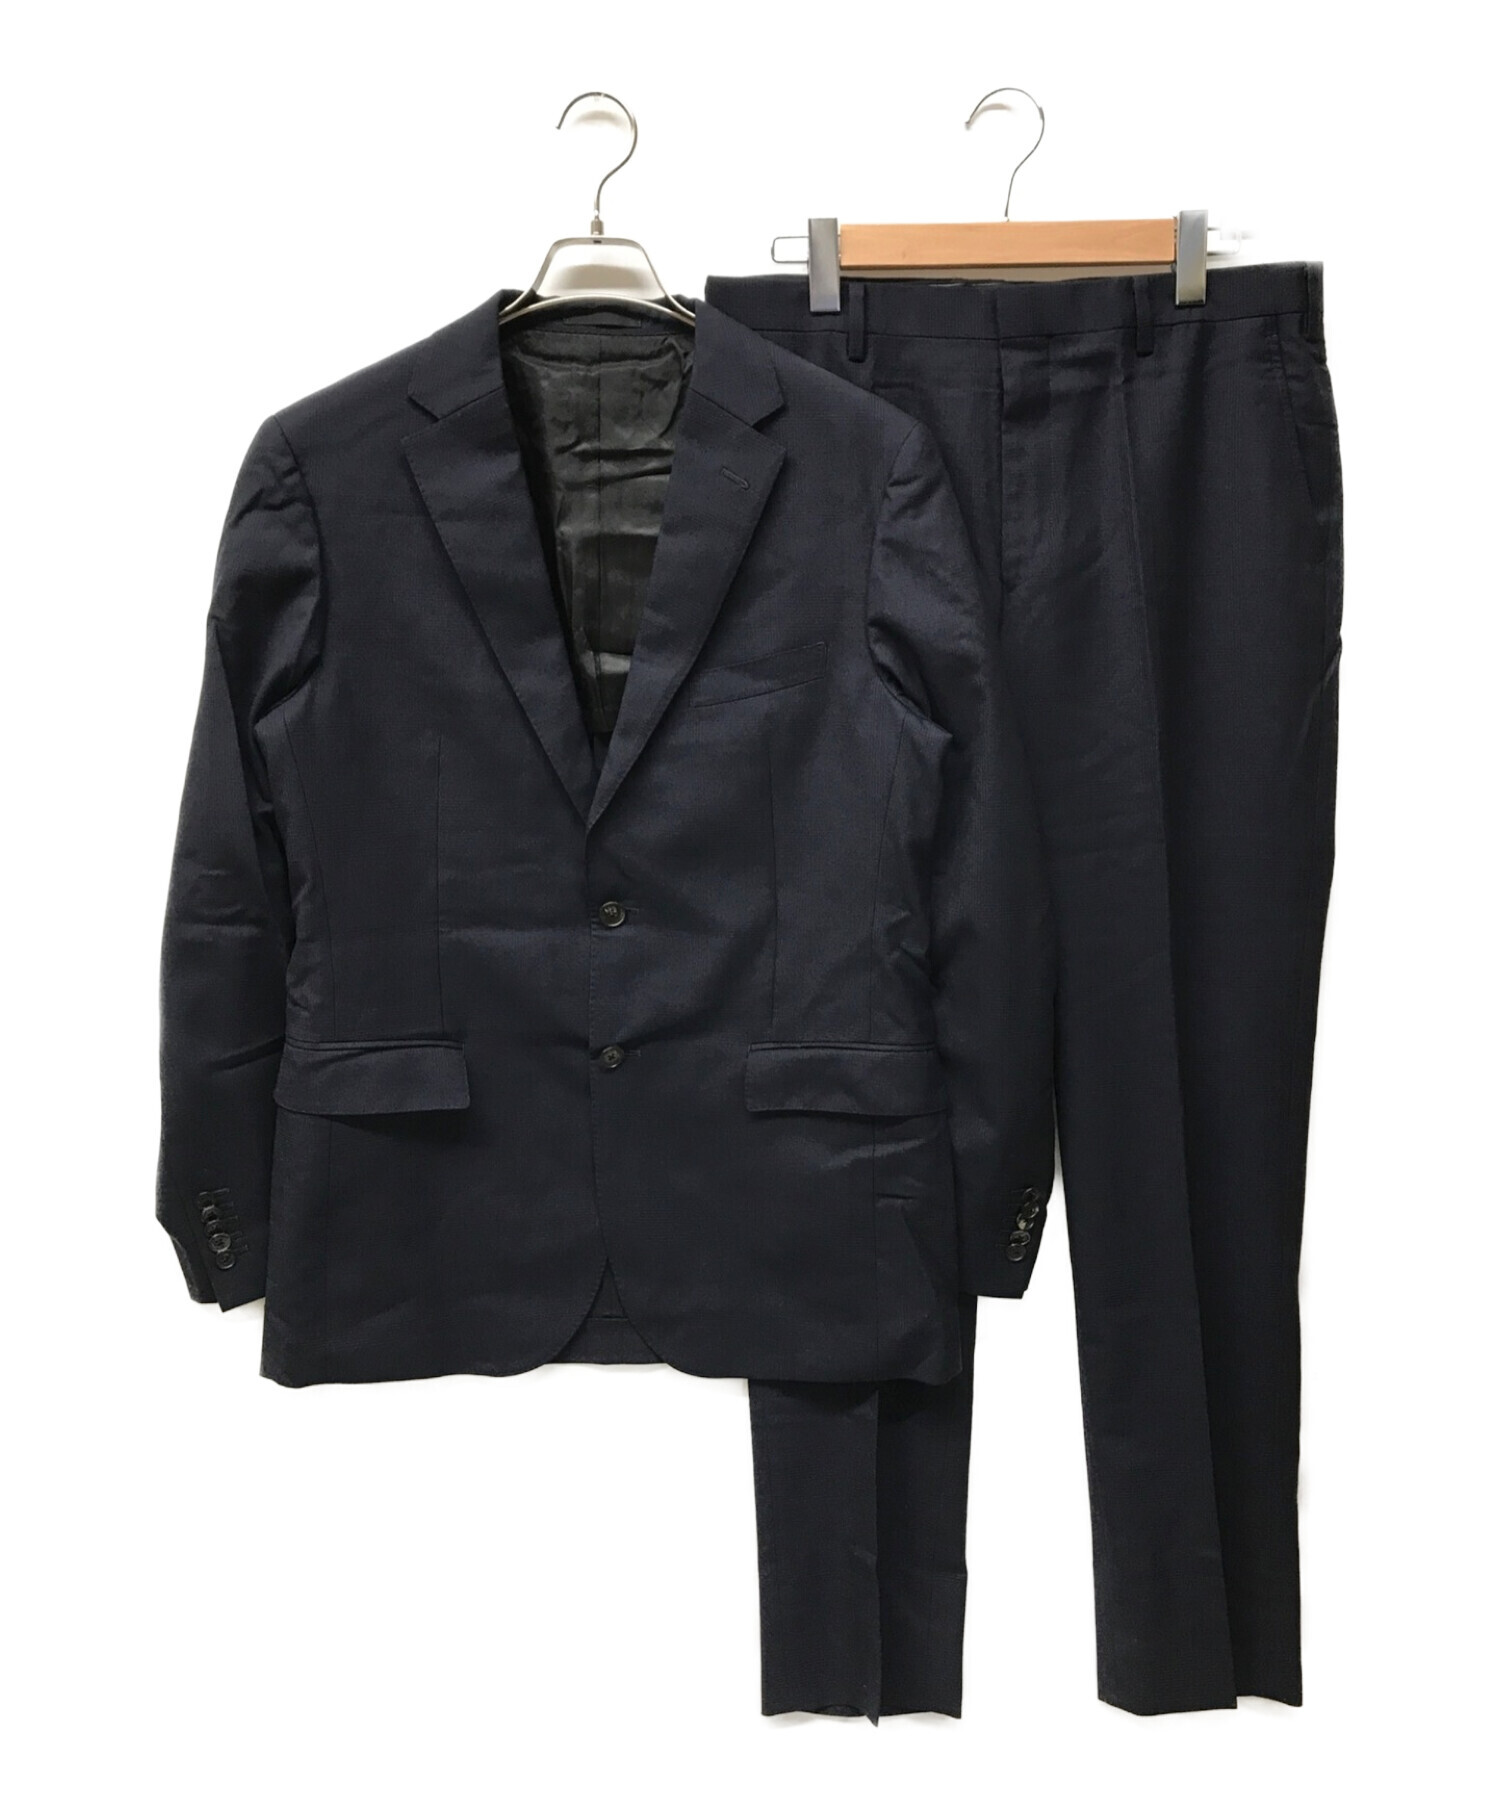 BLACK LABEL CRESTBRIDGE スーツ セットアップ 42L - スーツ